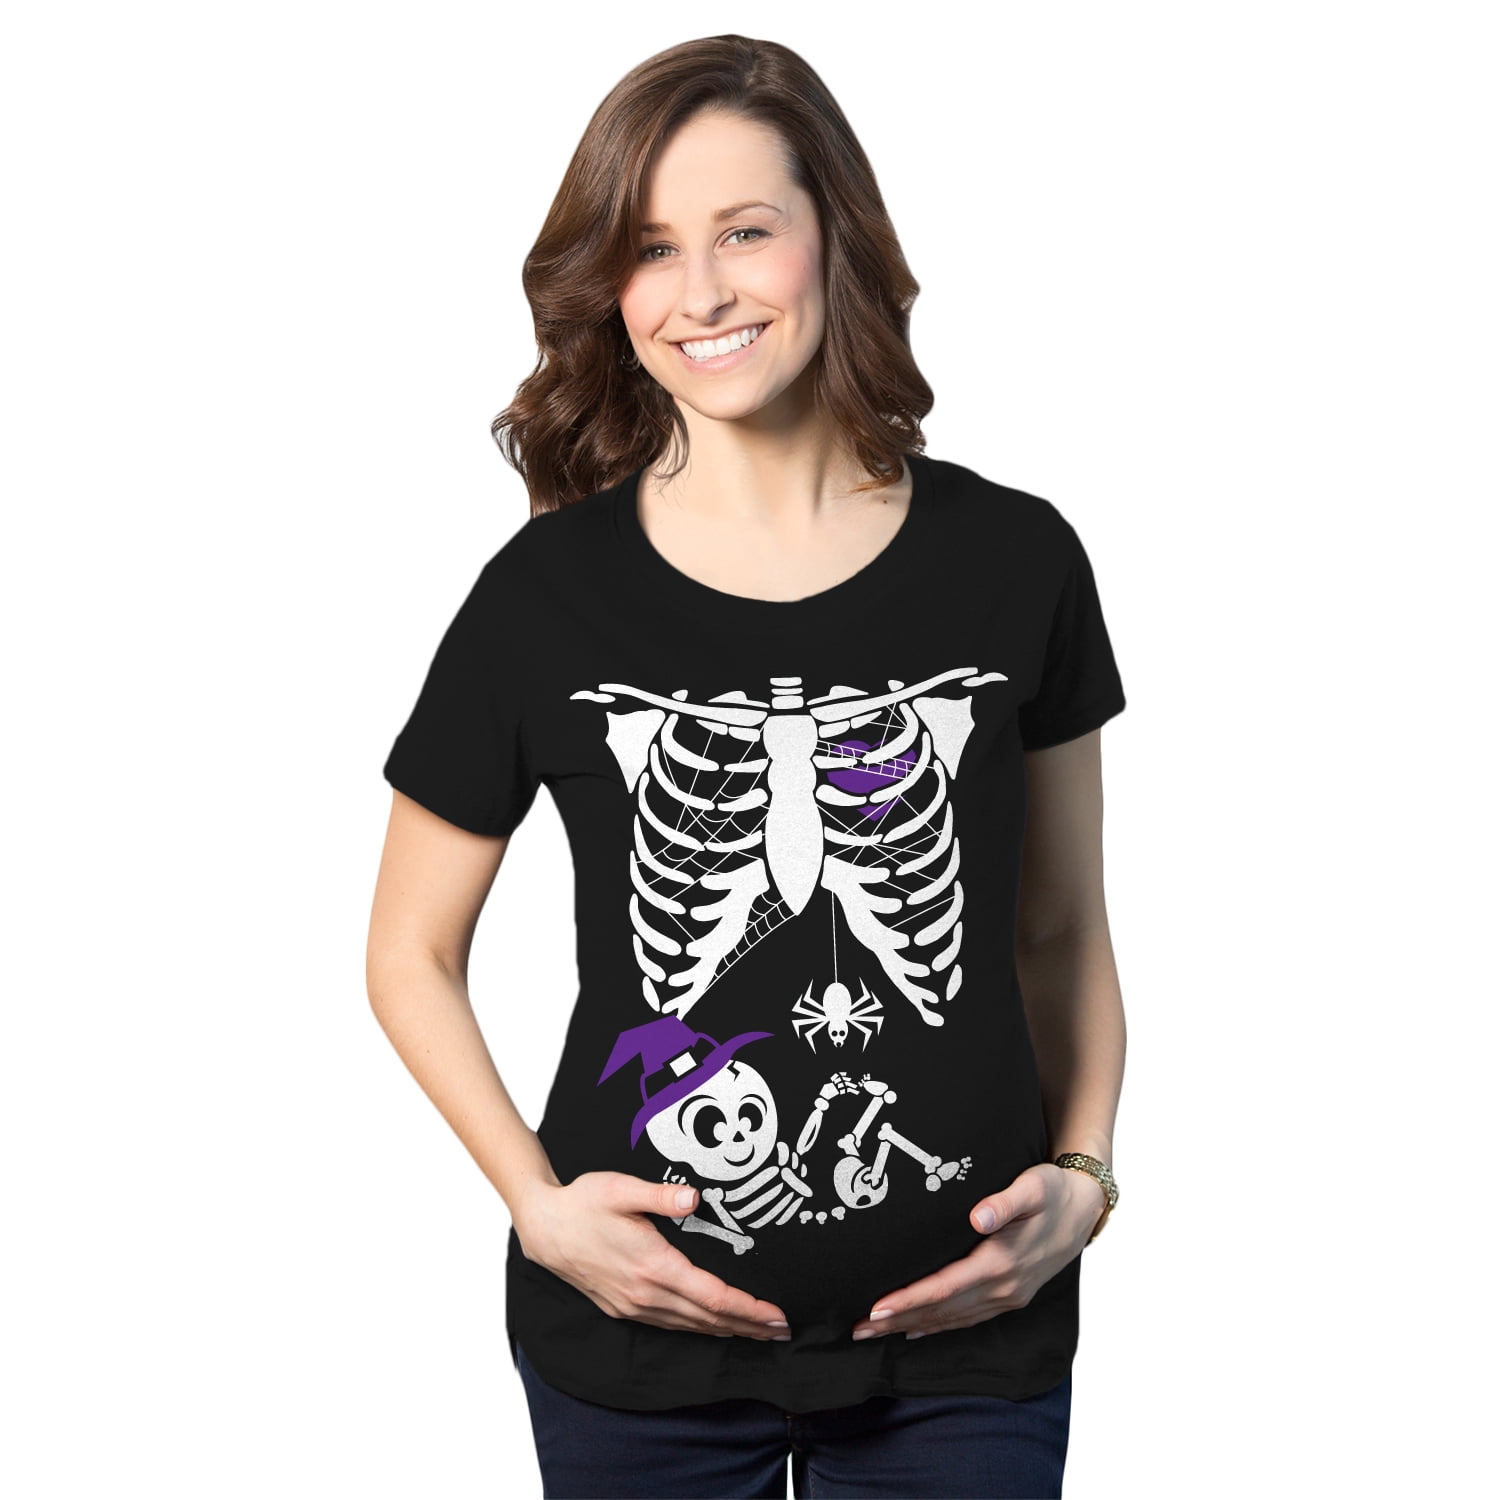 Milky Way Tshirts X-ray Skeleton Pregnancy Maternity tee Shirt 